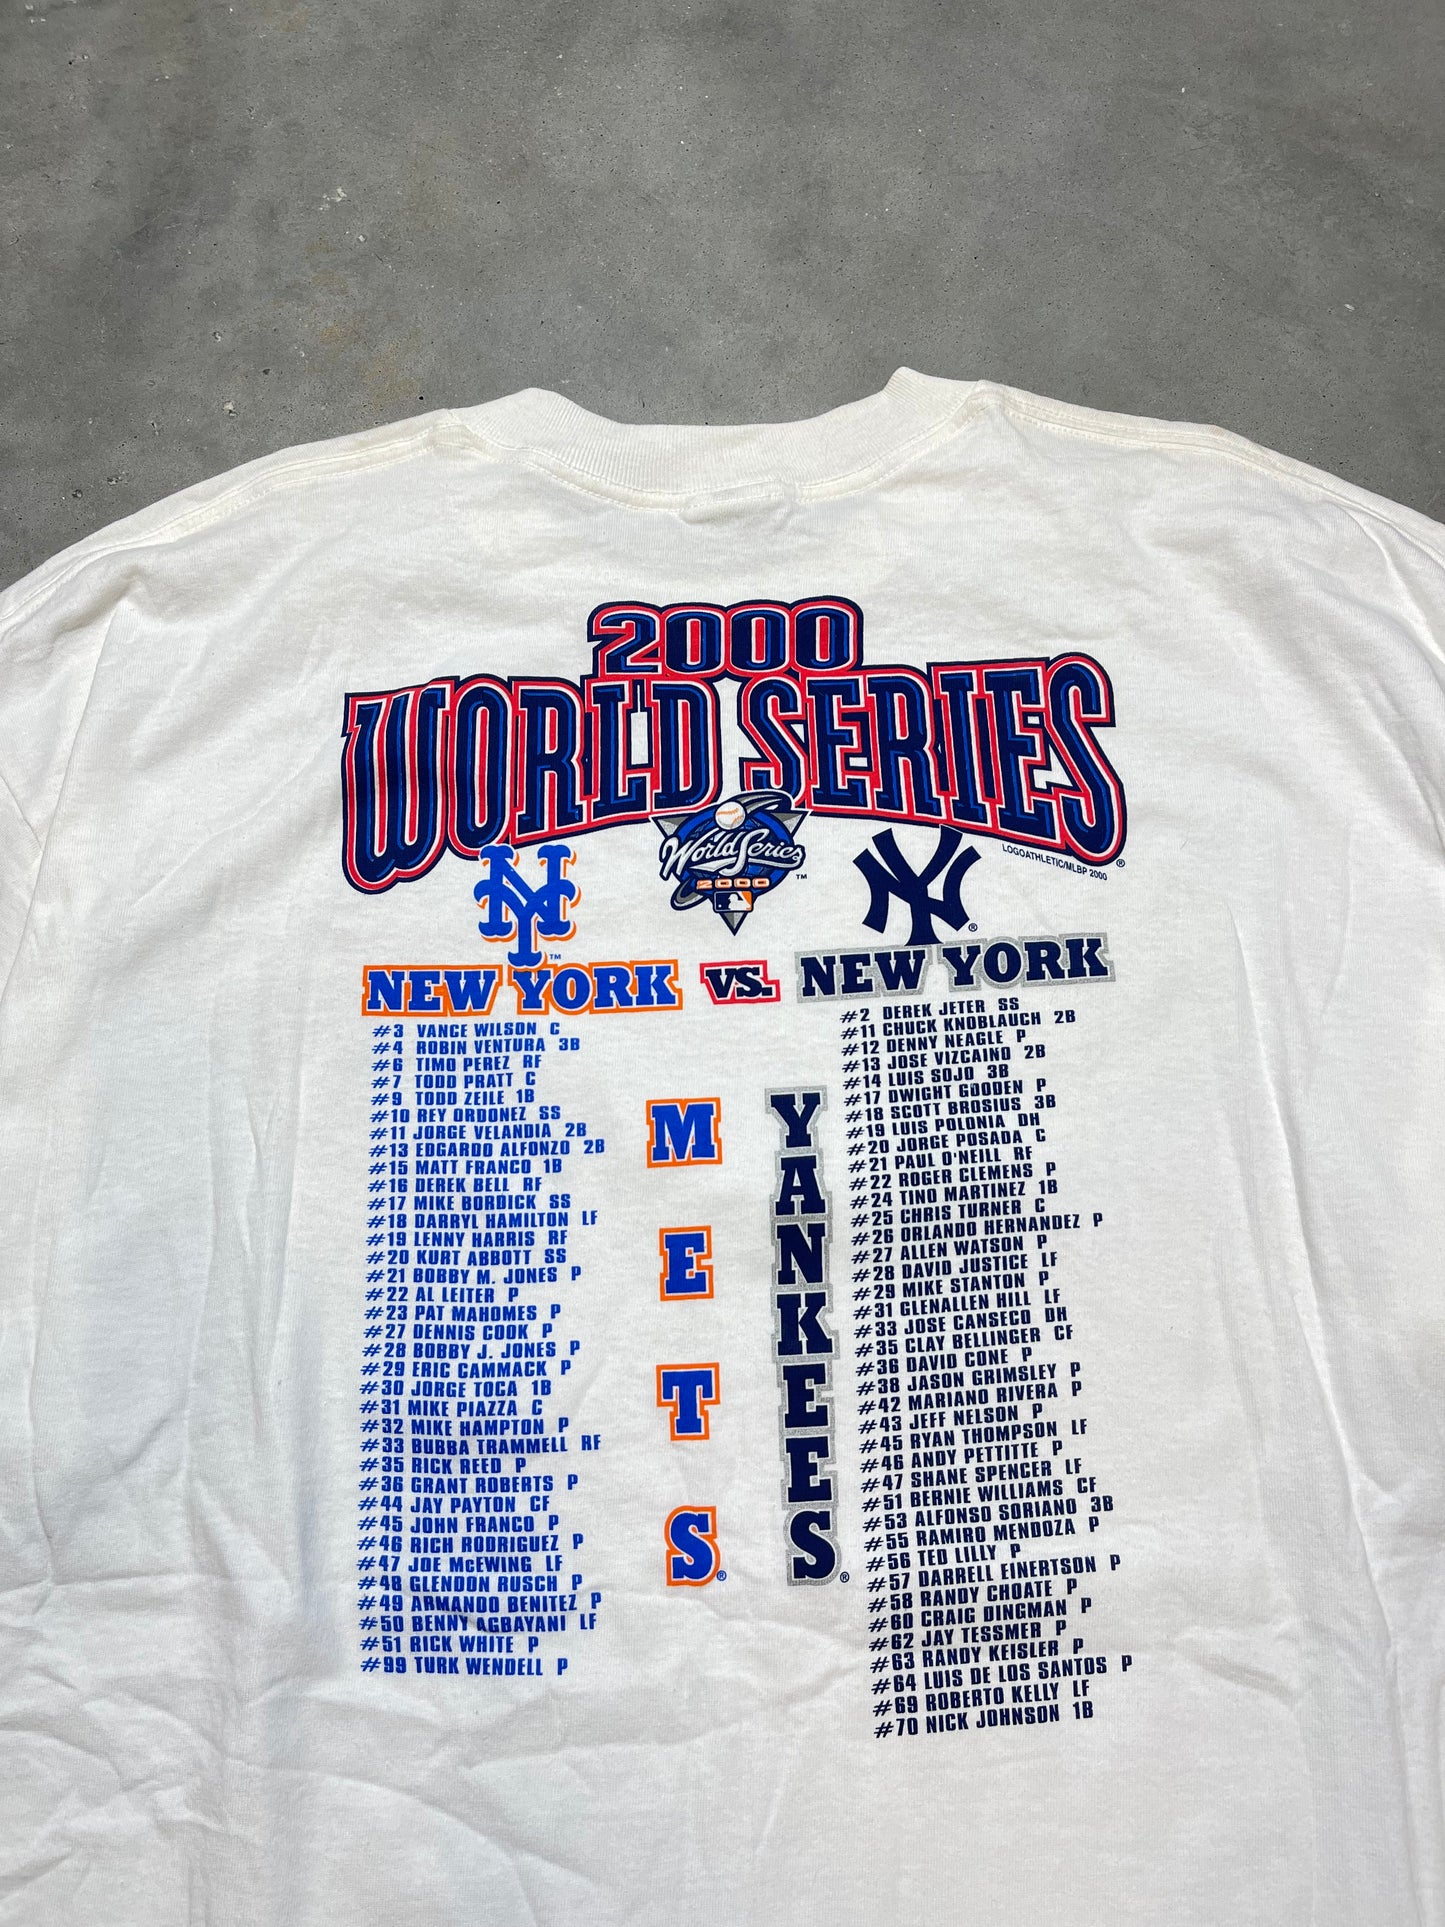 2000 New York Yankees vs. New York Mets Vintage Sub Way Series World Series MLB Tee - Deadstock (XXL)